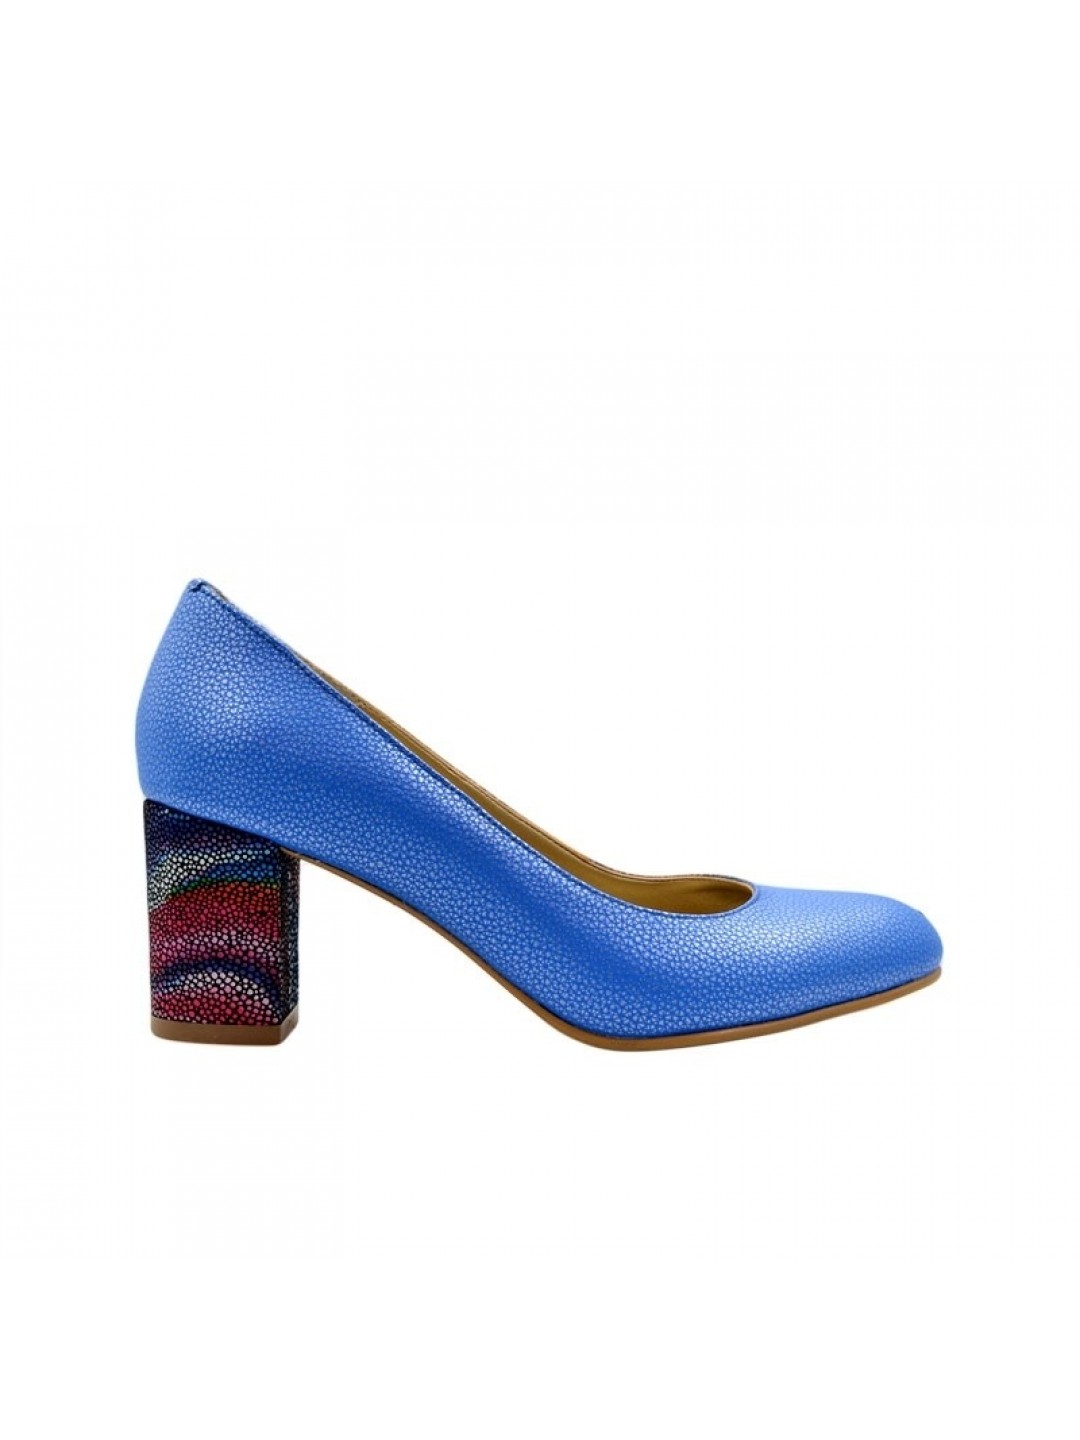 Pantofi Dama piele naturala albastru Sorana